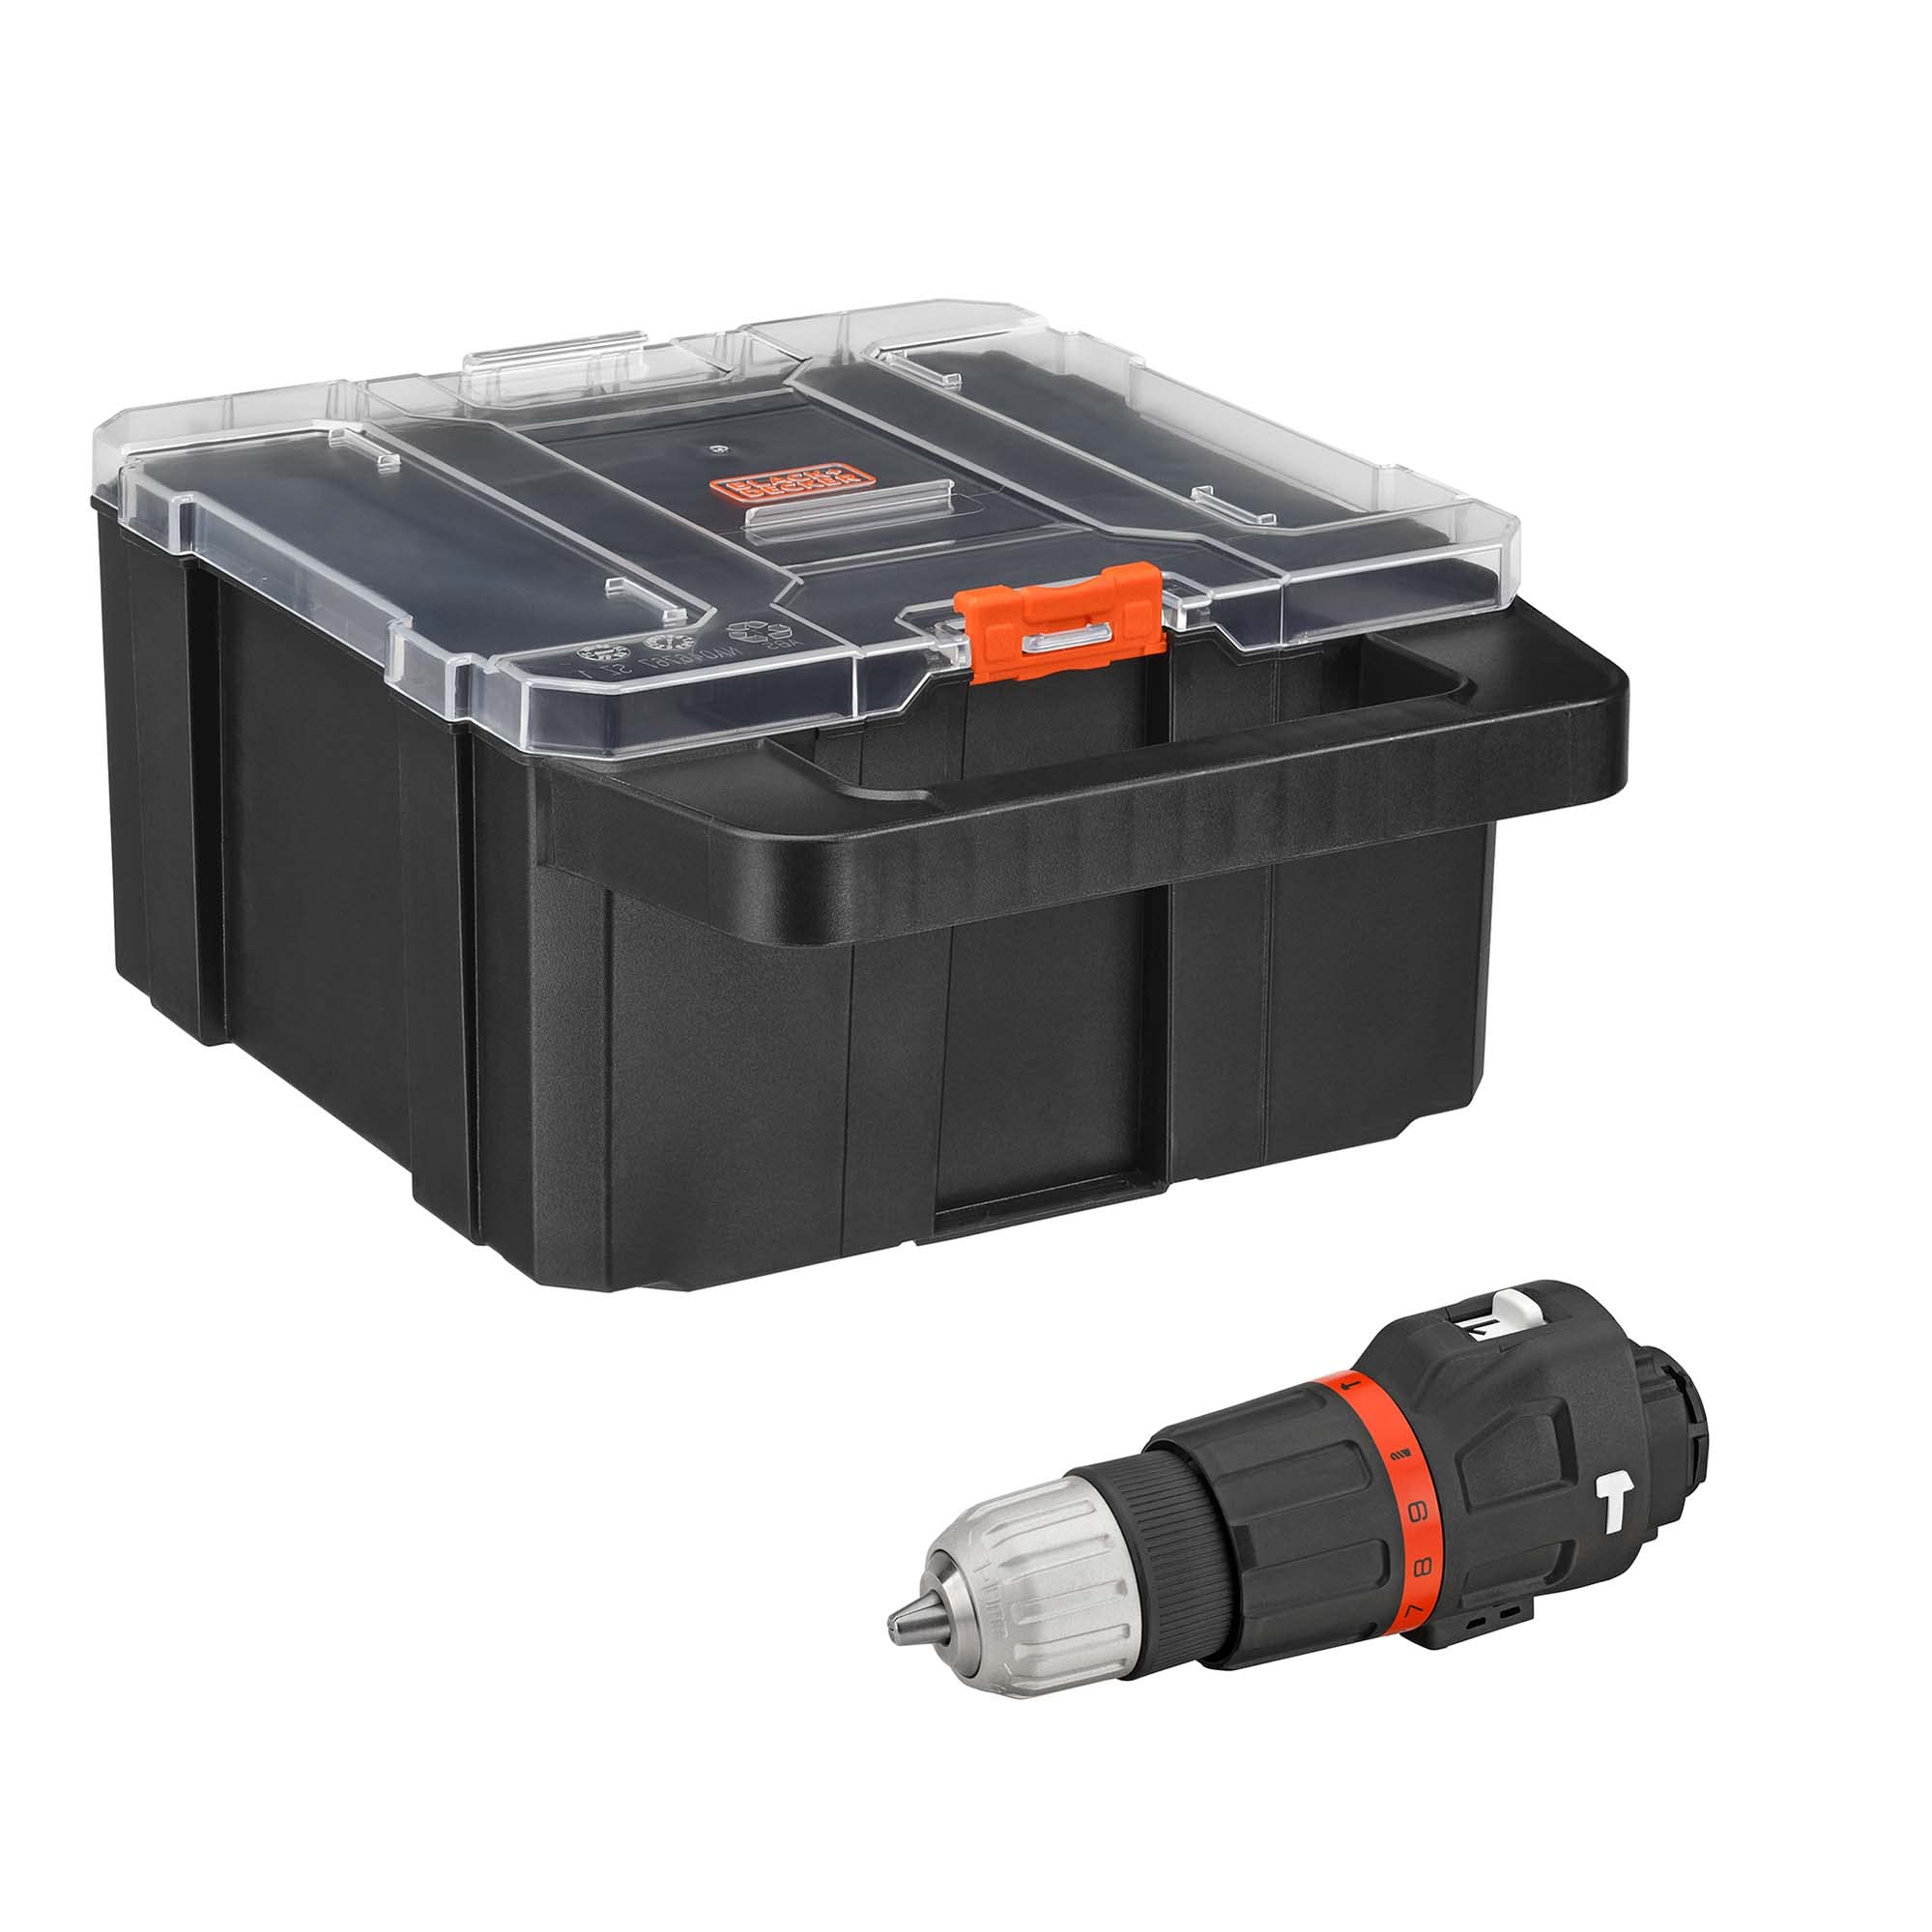 BLACK+DECKER MATRIX 20V MAX Hammer Drill Attachment With Storage Case (BDCMTHDSTFF)